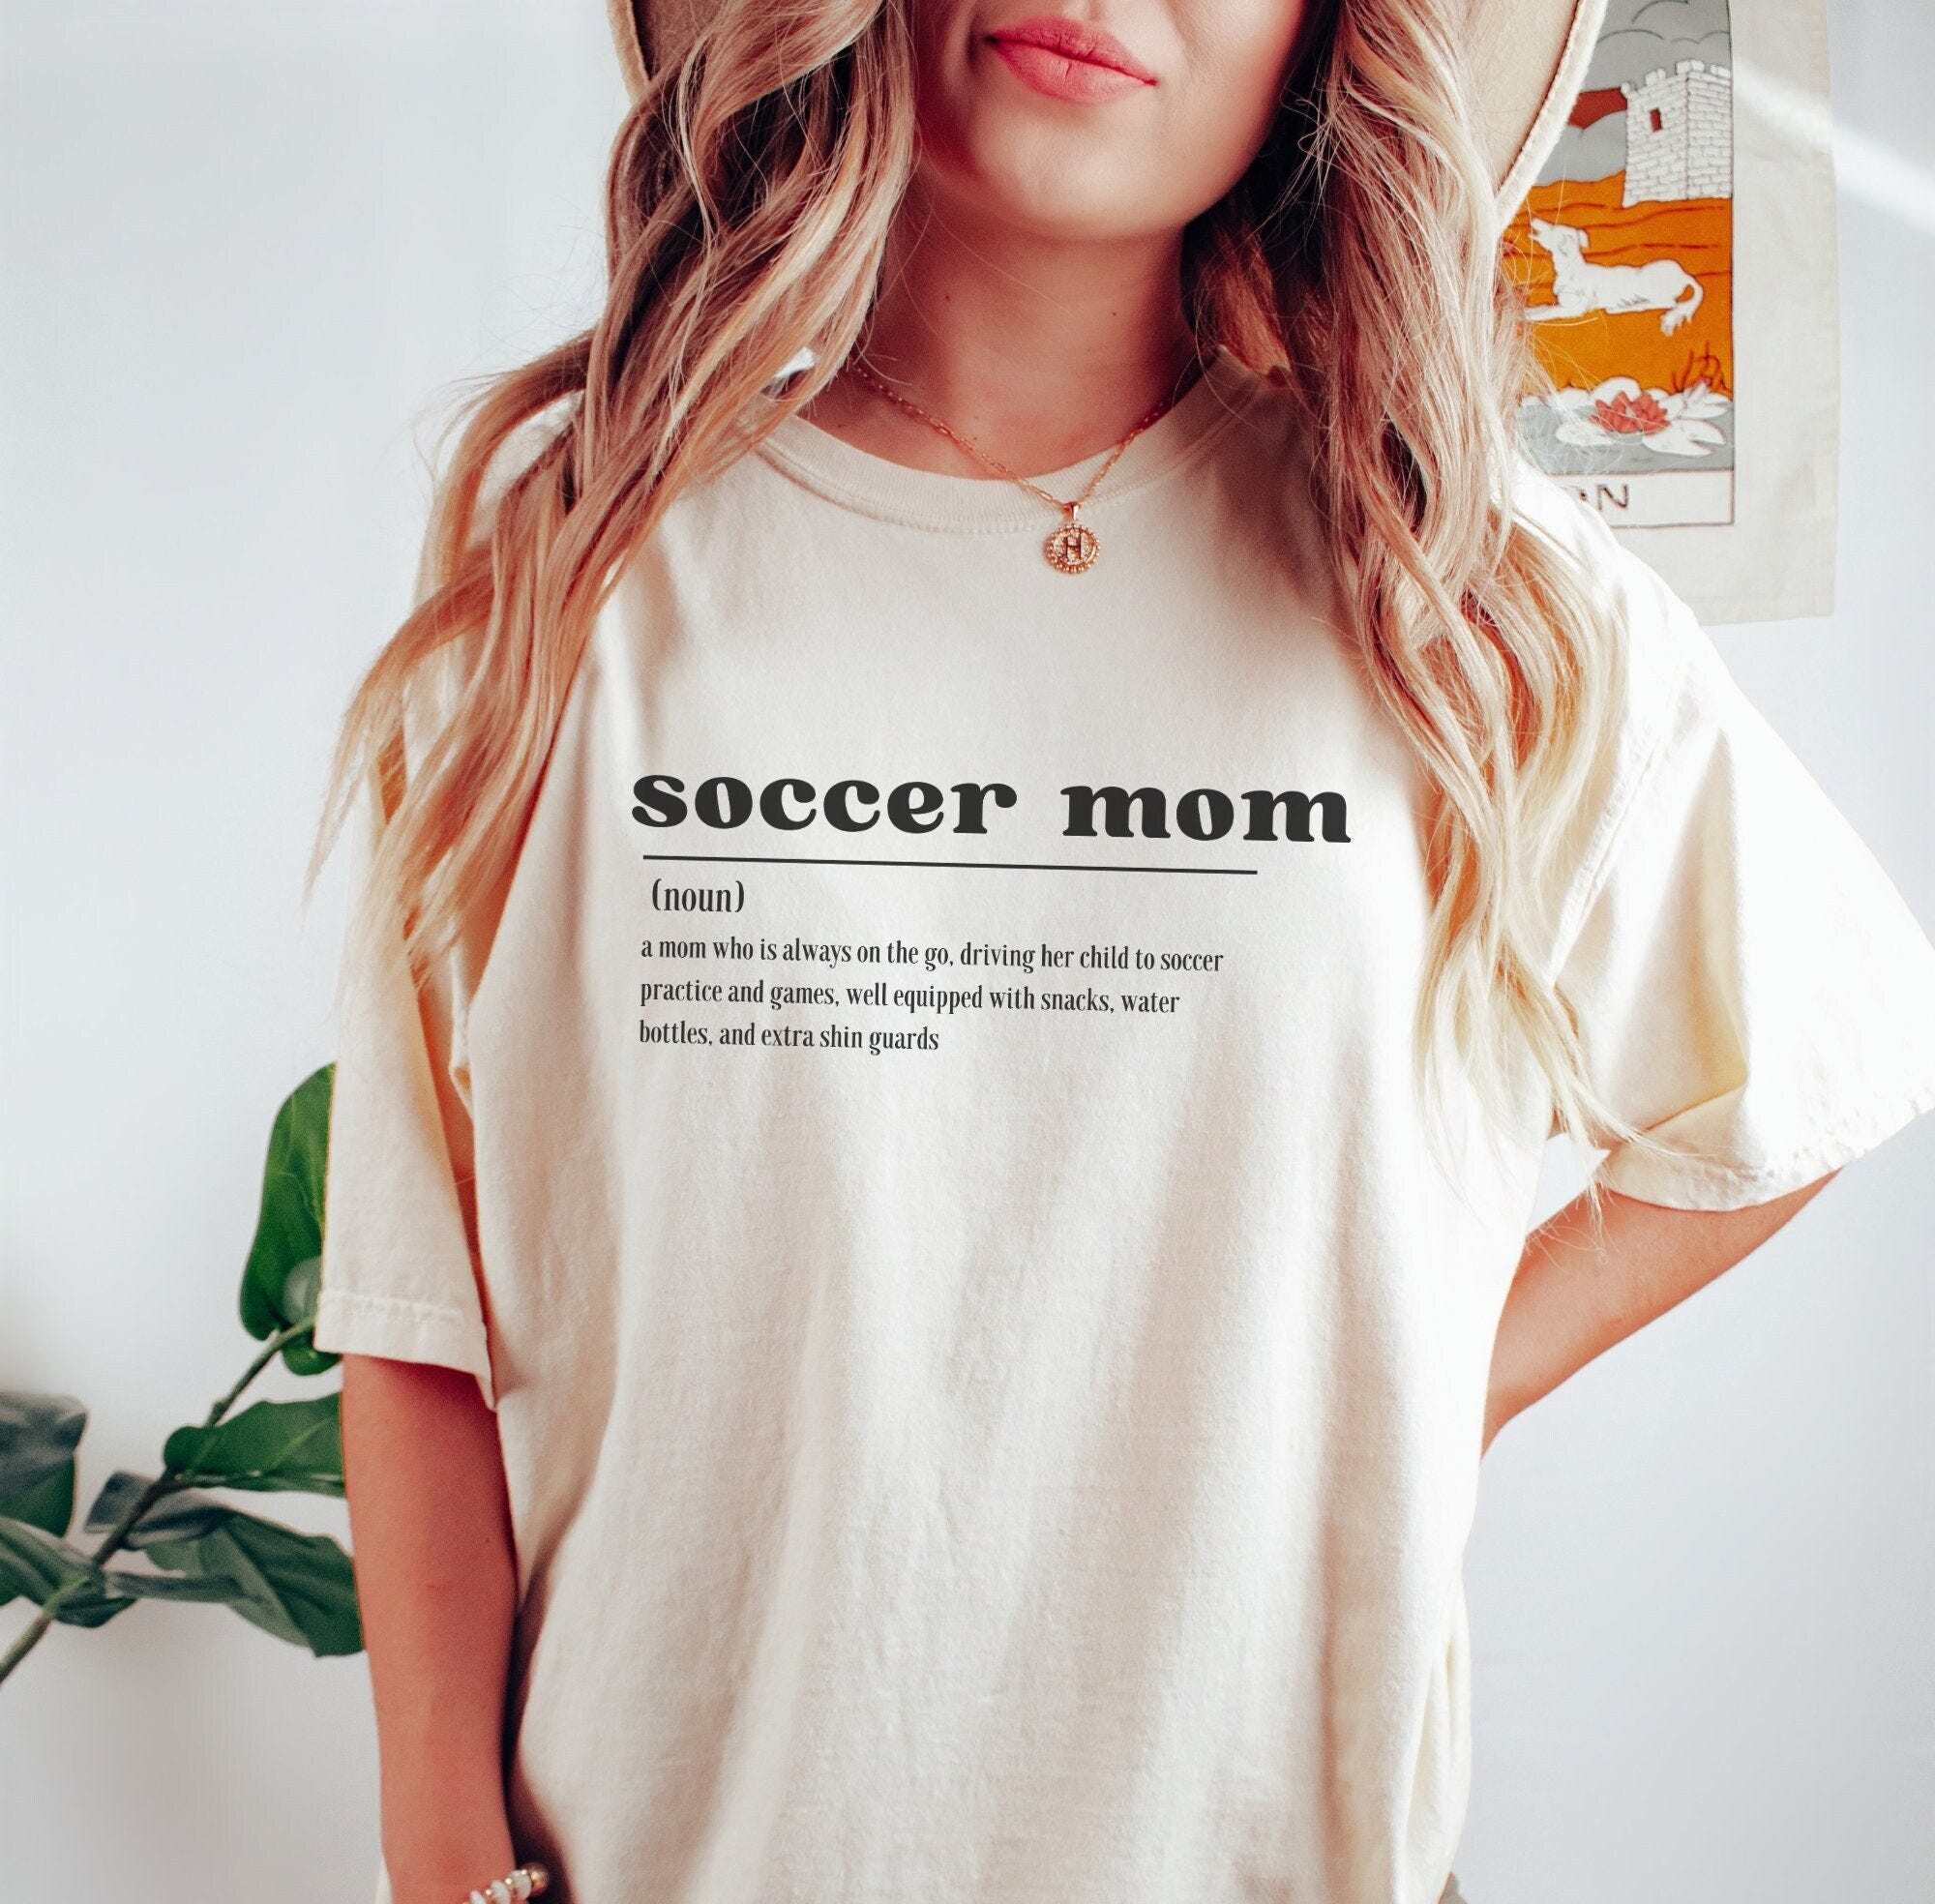 Soccer mom t shirt, Soccer mom definition shirt, Soccer mom shirt, Game day shirt, Gift for soccer mom, Sport mom shirt, Mom soccer shirt